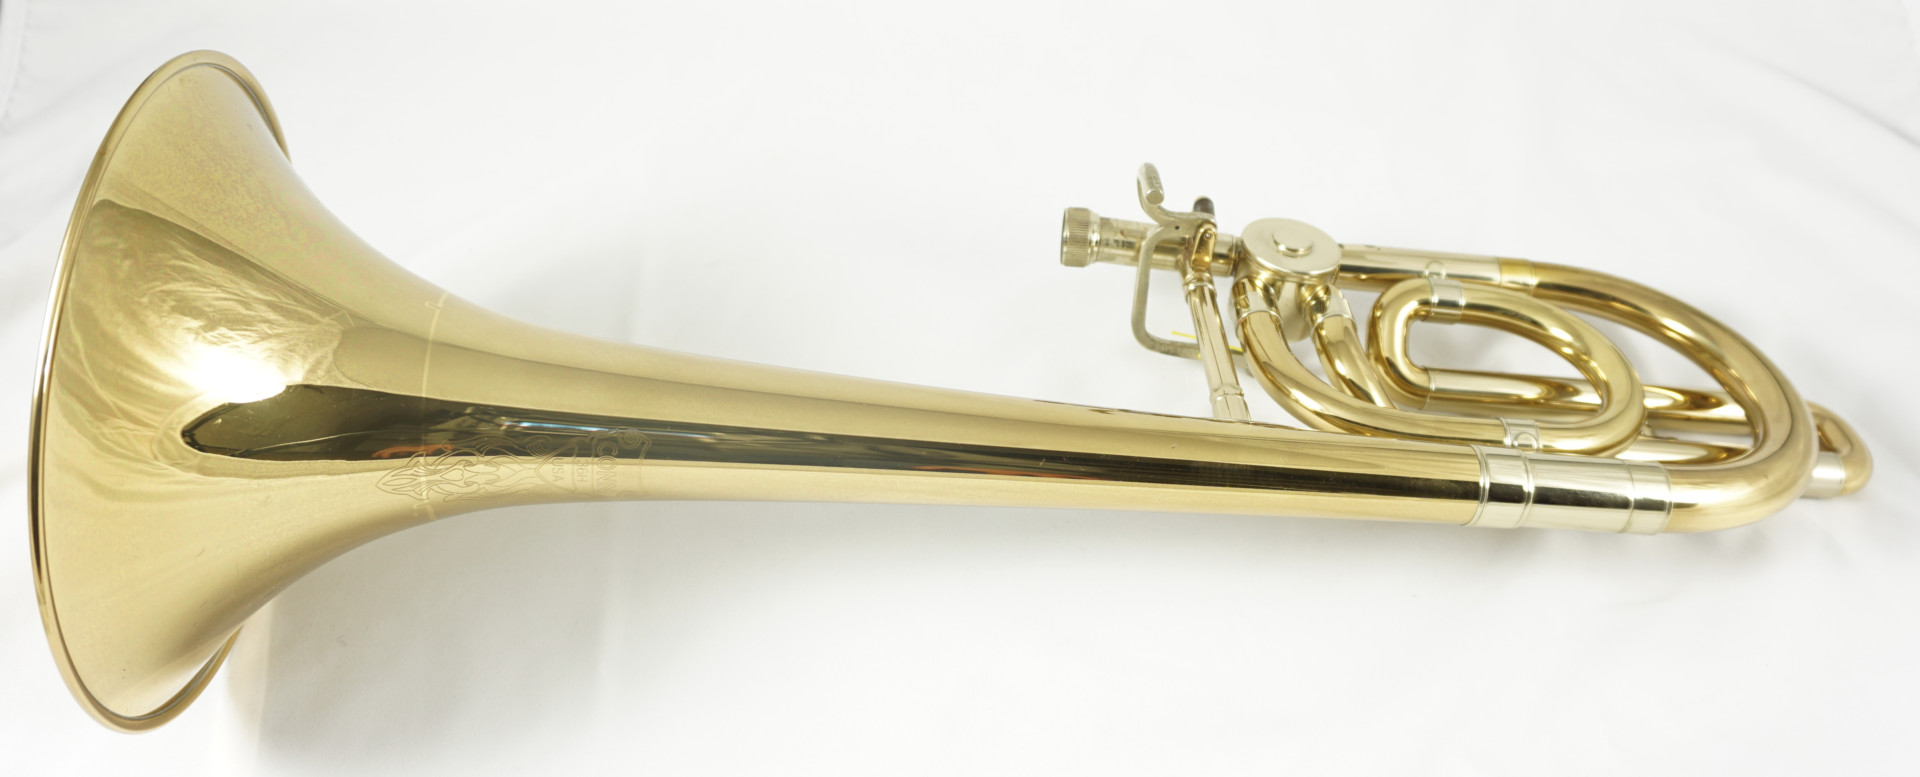 Conn 36H alto trombone - Swisstbone